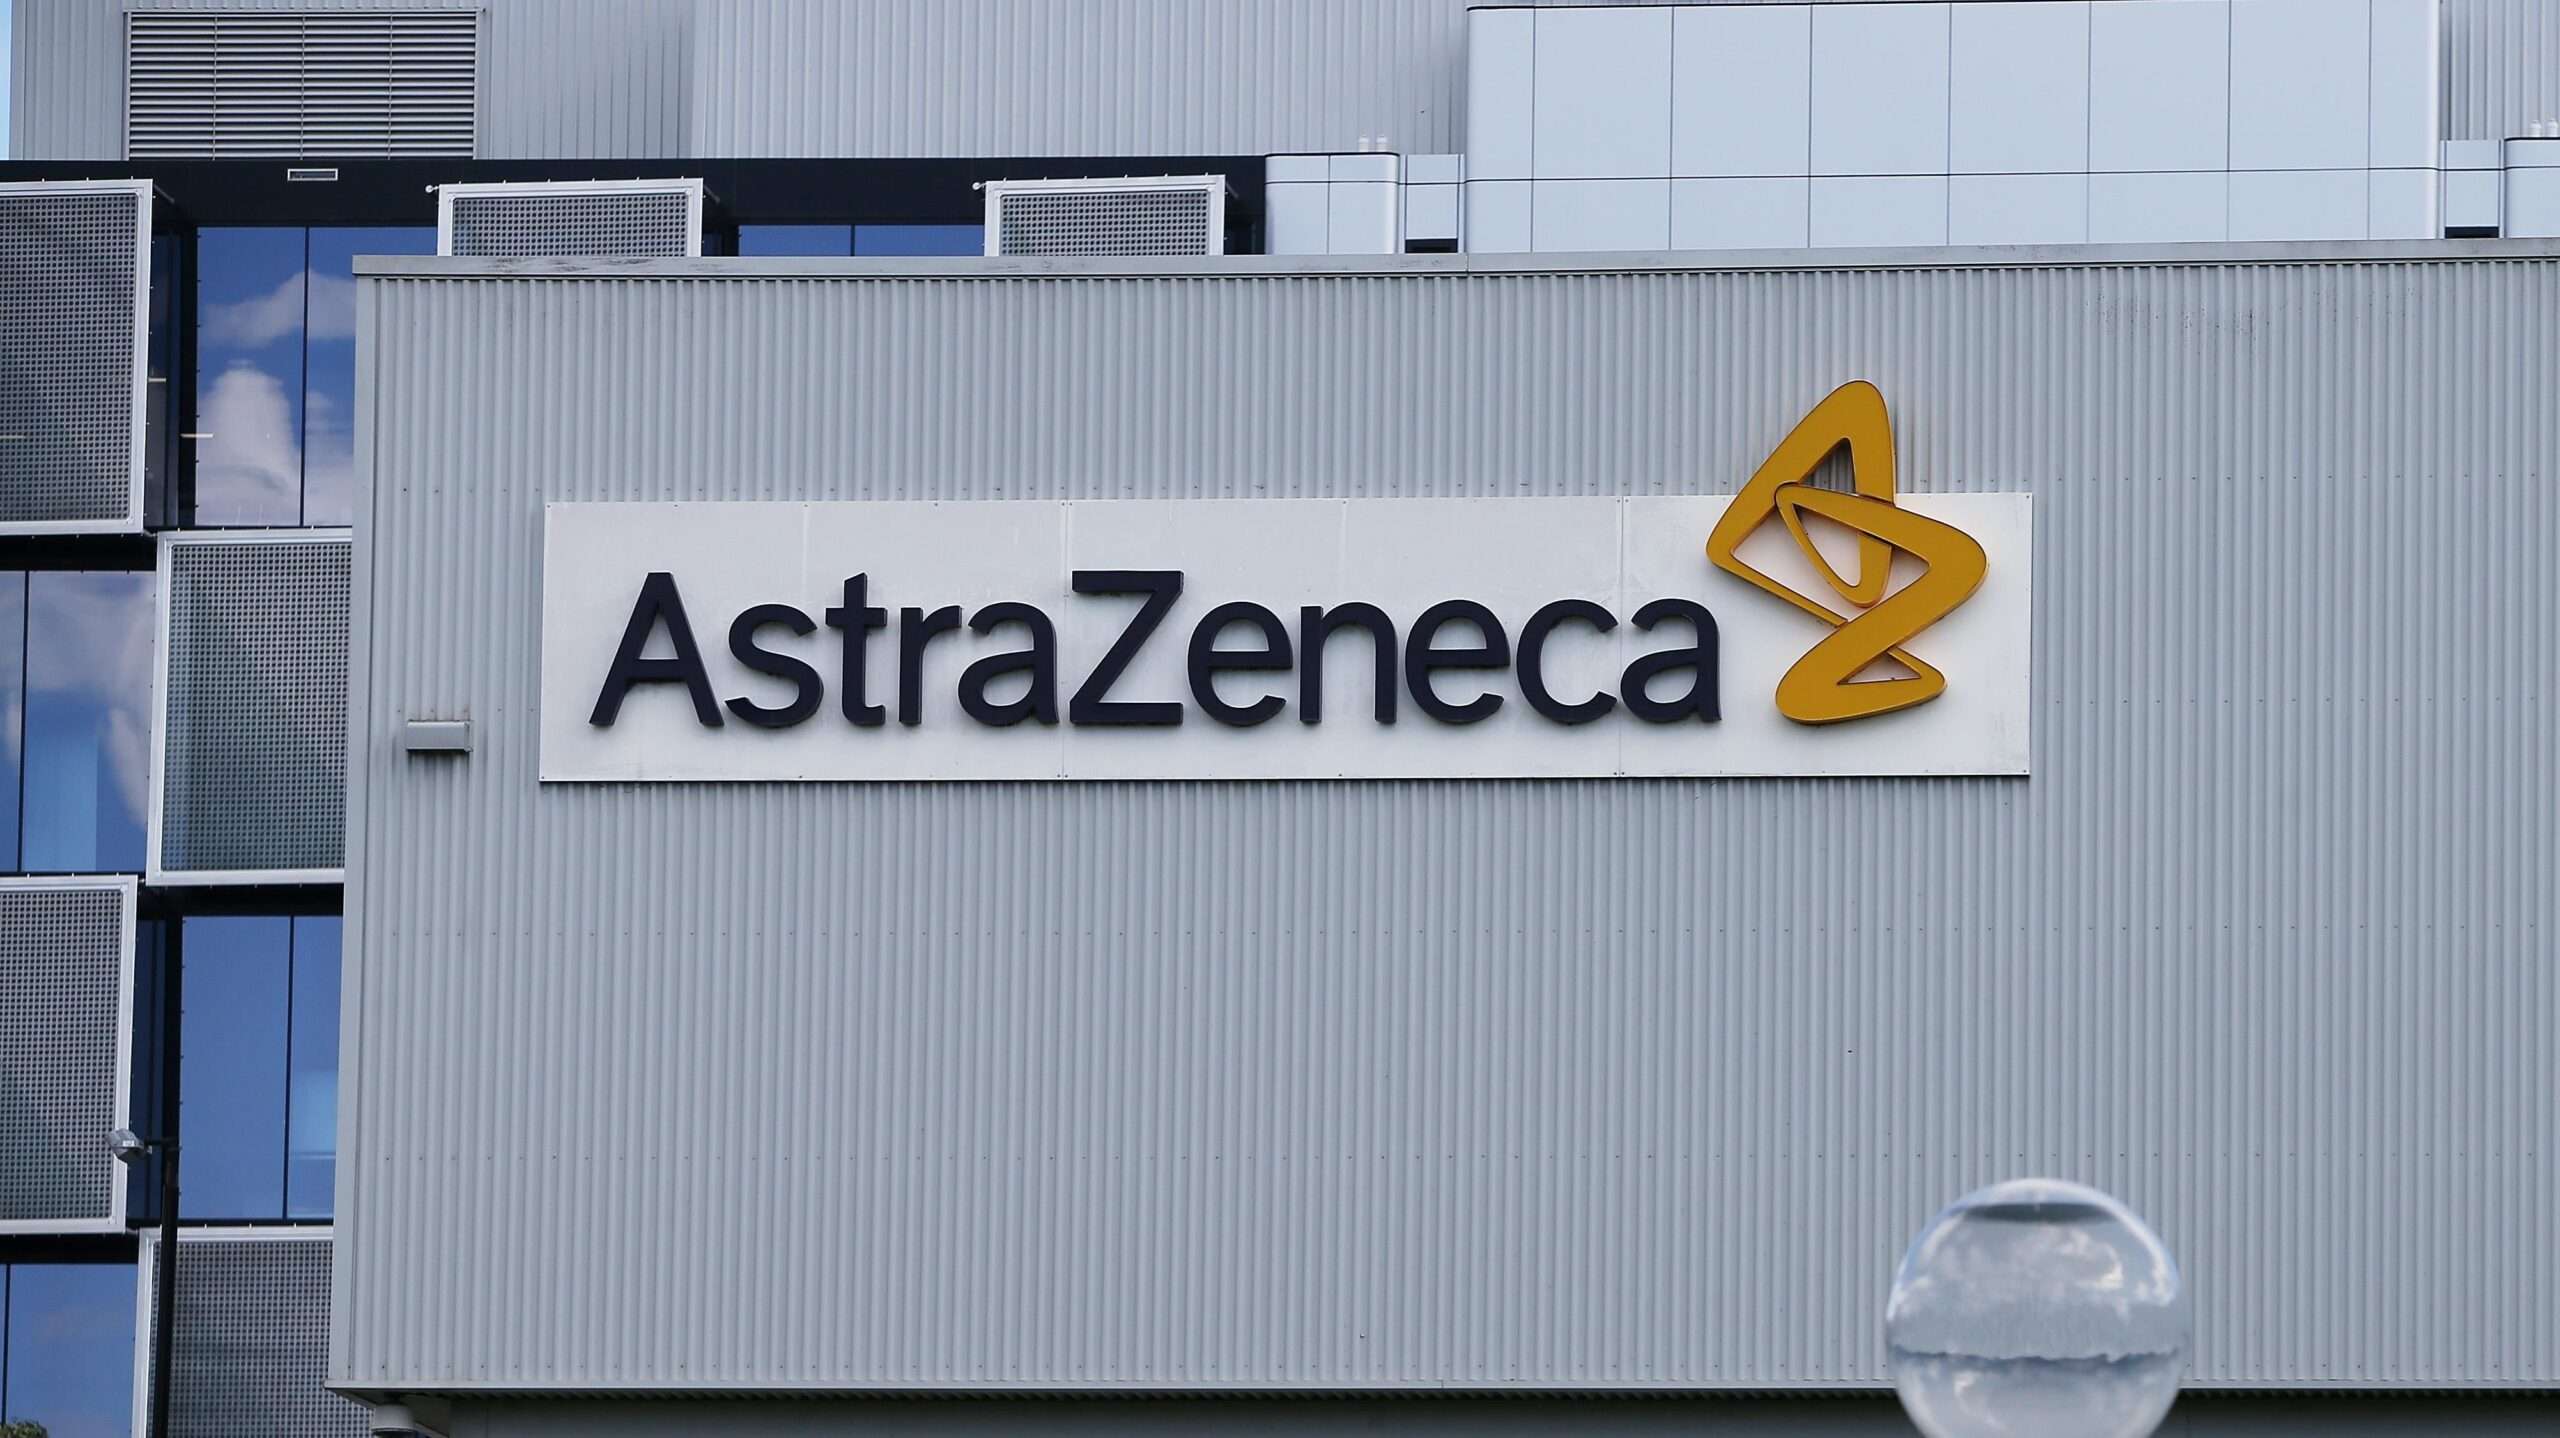 AstraZeneca starts trial of COVID-19 antibody treatment - Inside Financial Markets